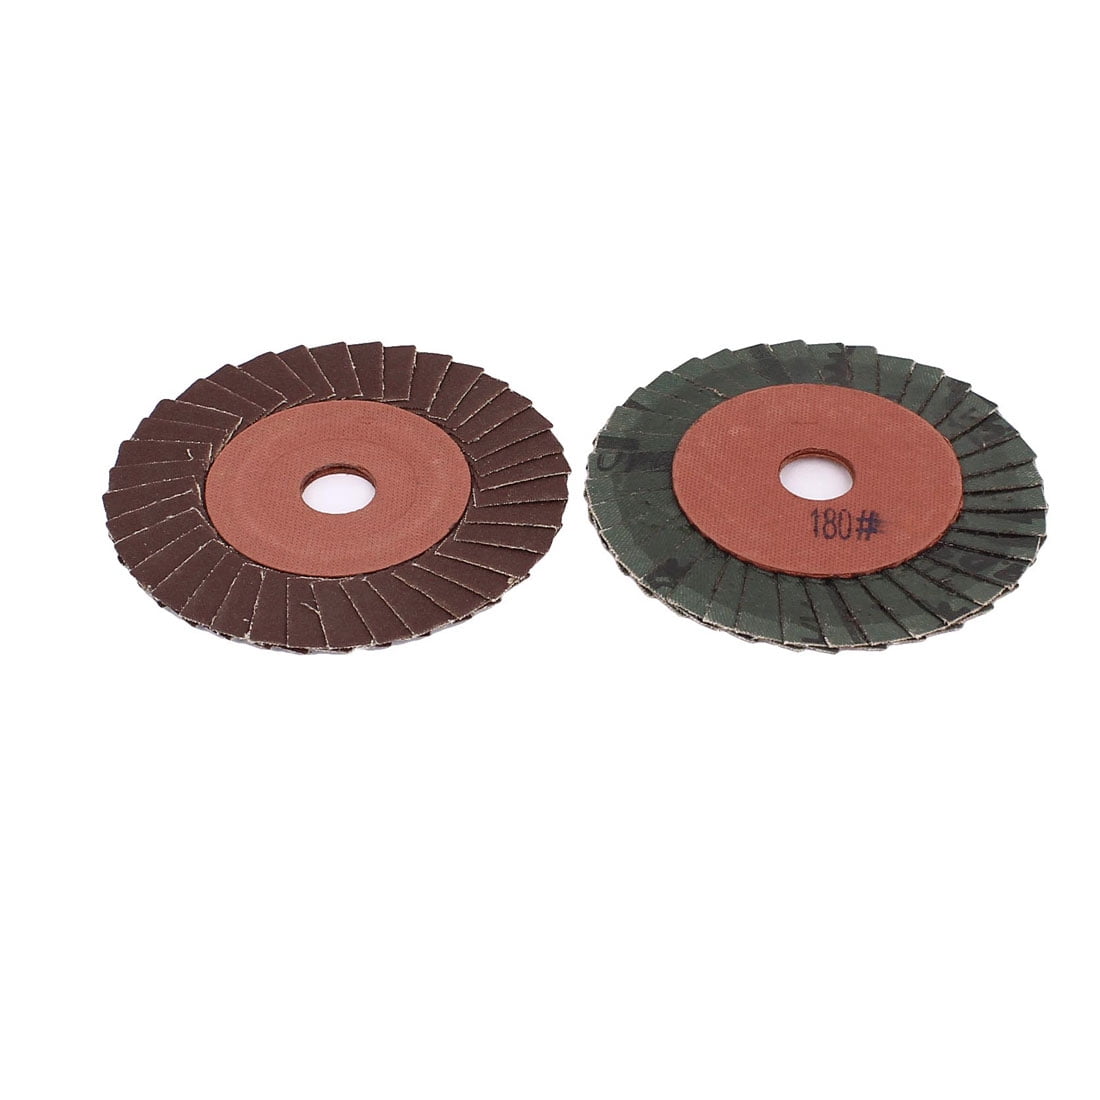 Size : 75mm F-MINGNIAN-TOOL 3pcs 75mm Grinding Wheels Flap Discs 3 Inch Angle Grinder Sanding Discs Metal Plastic Wood Abrasive Tool